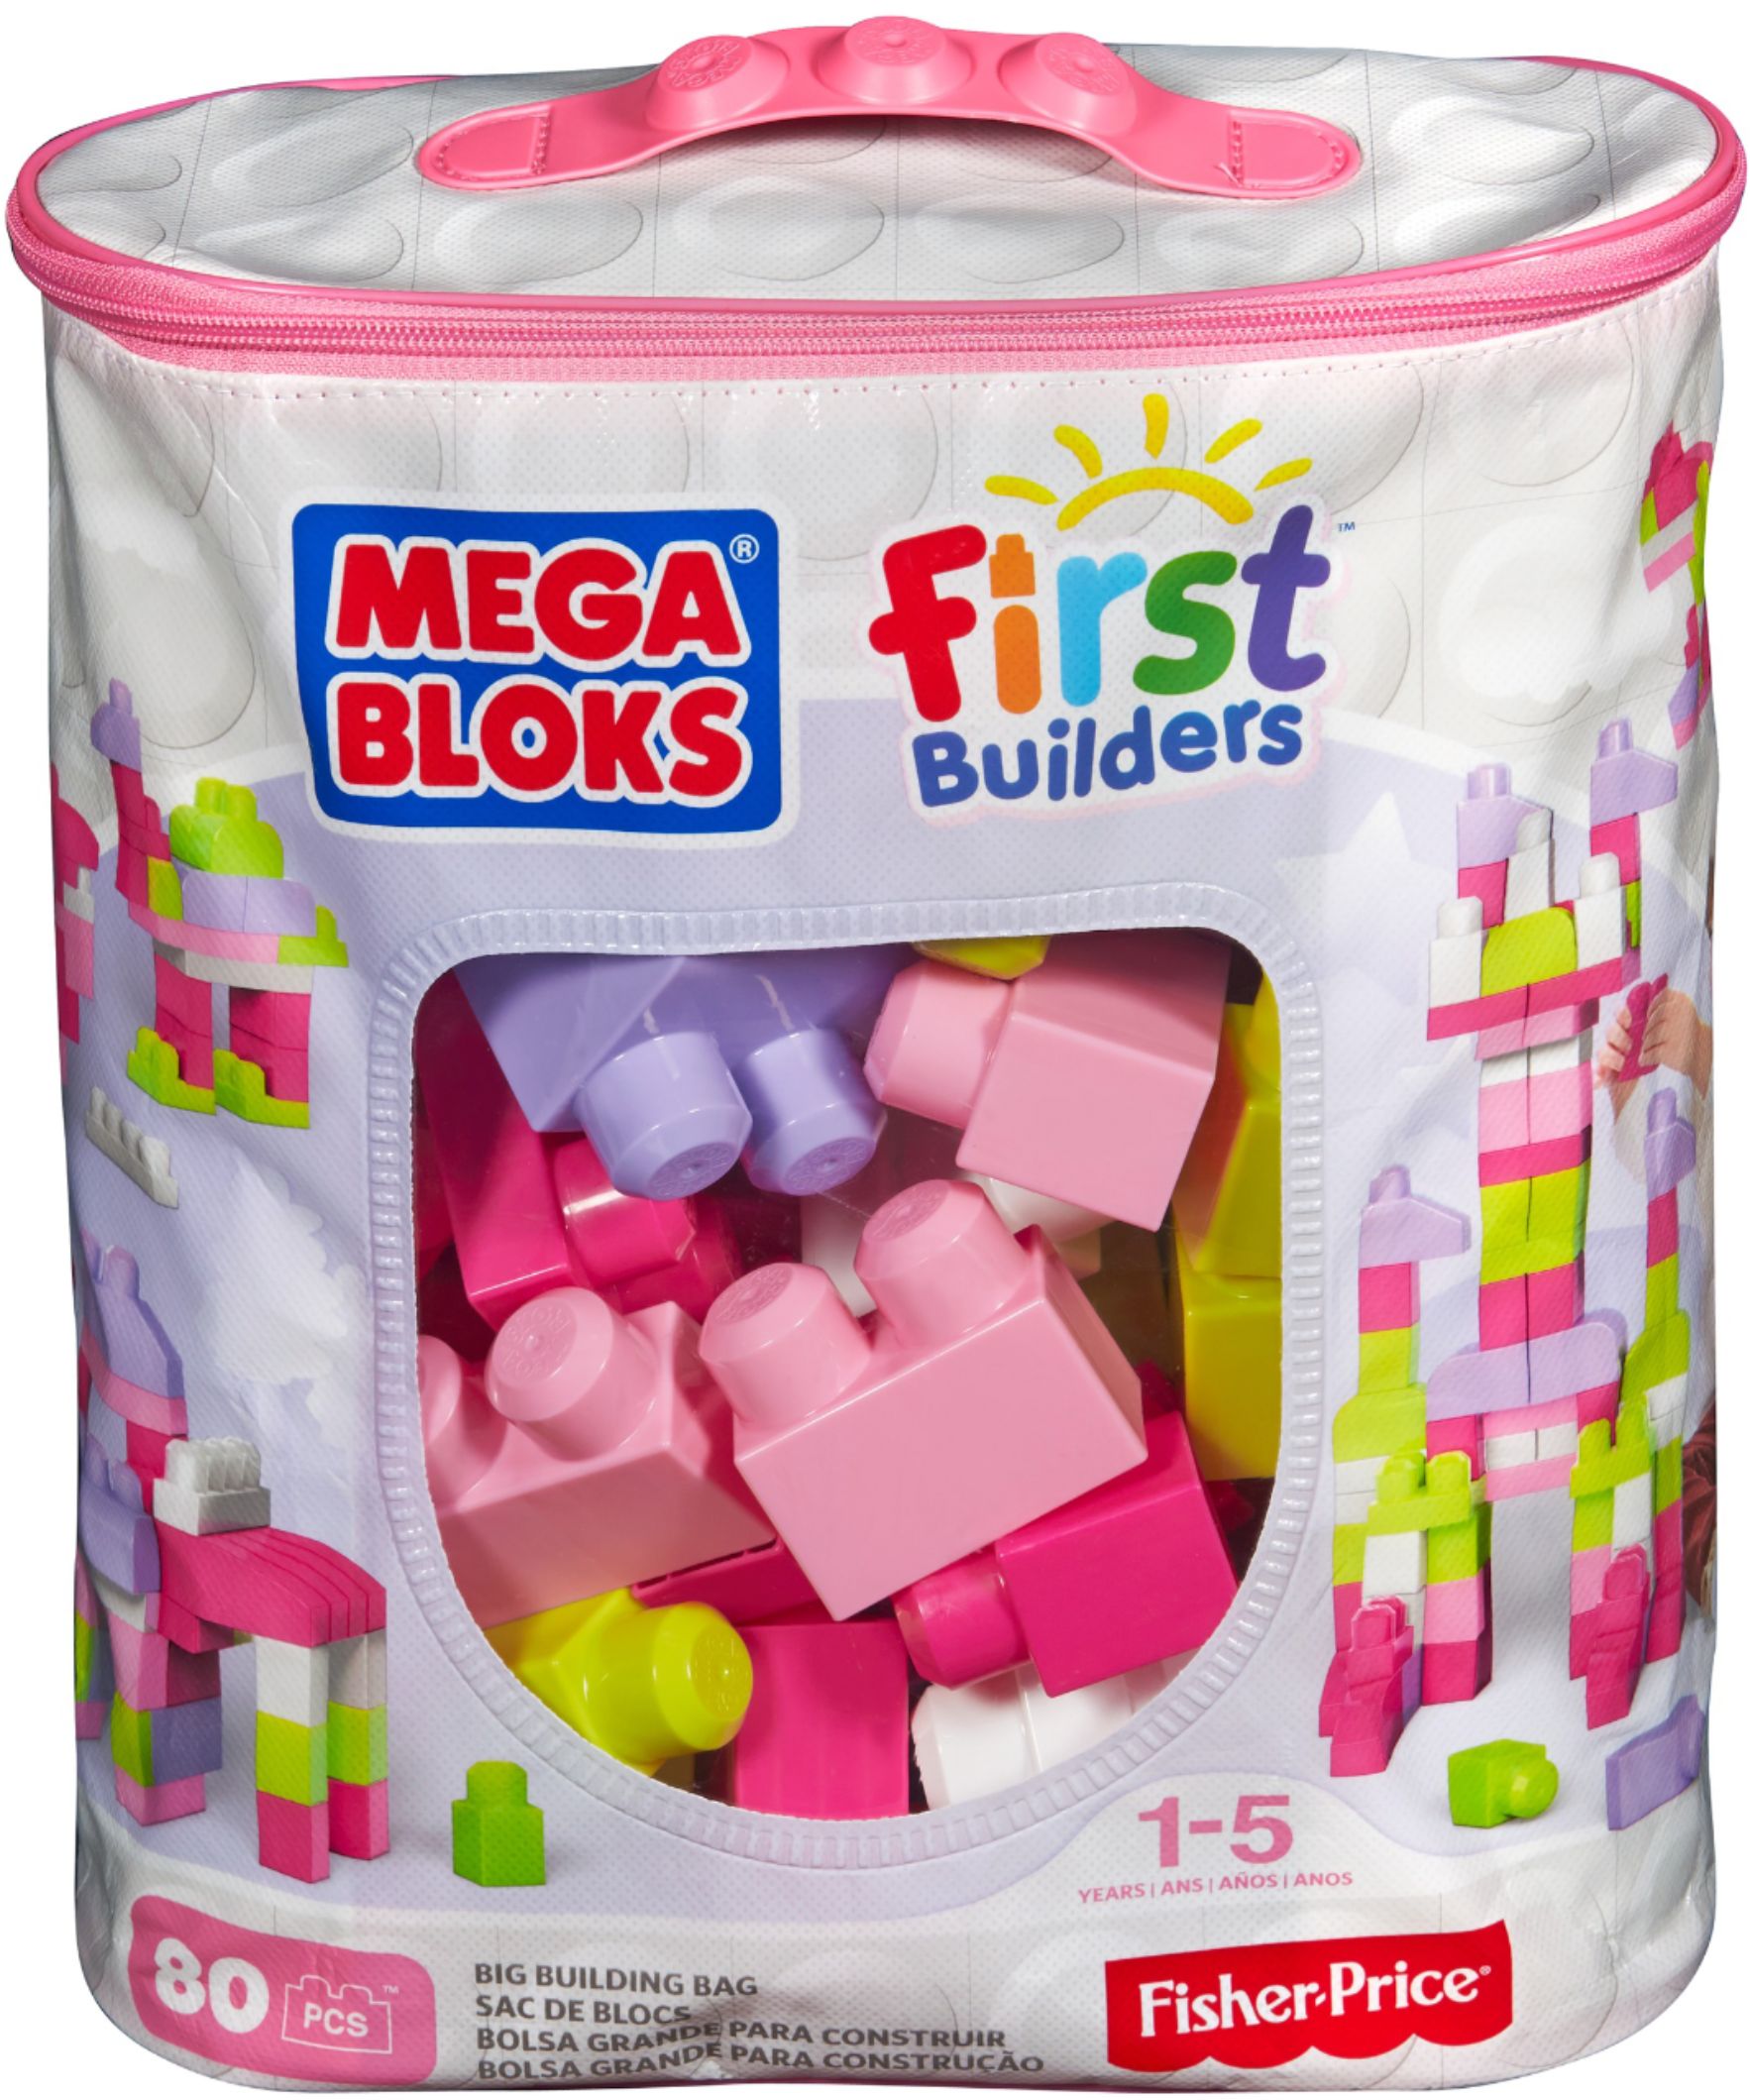 Mega Bloks First Builders Big Building Bag 80 Pieces Pink for sale online DCH62 